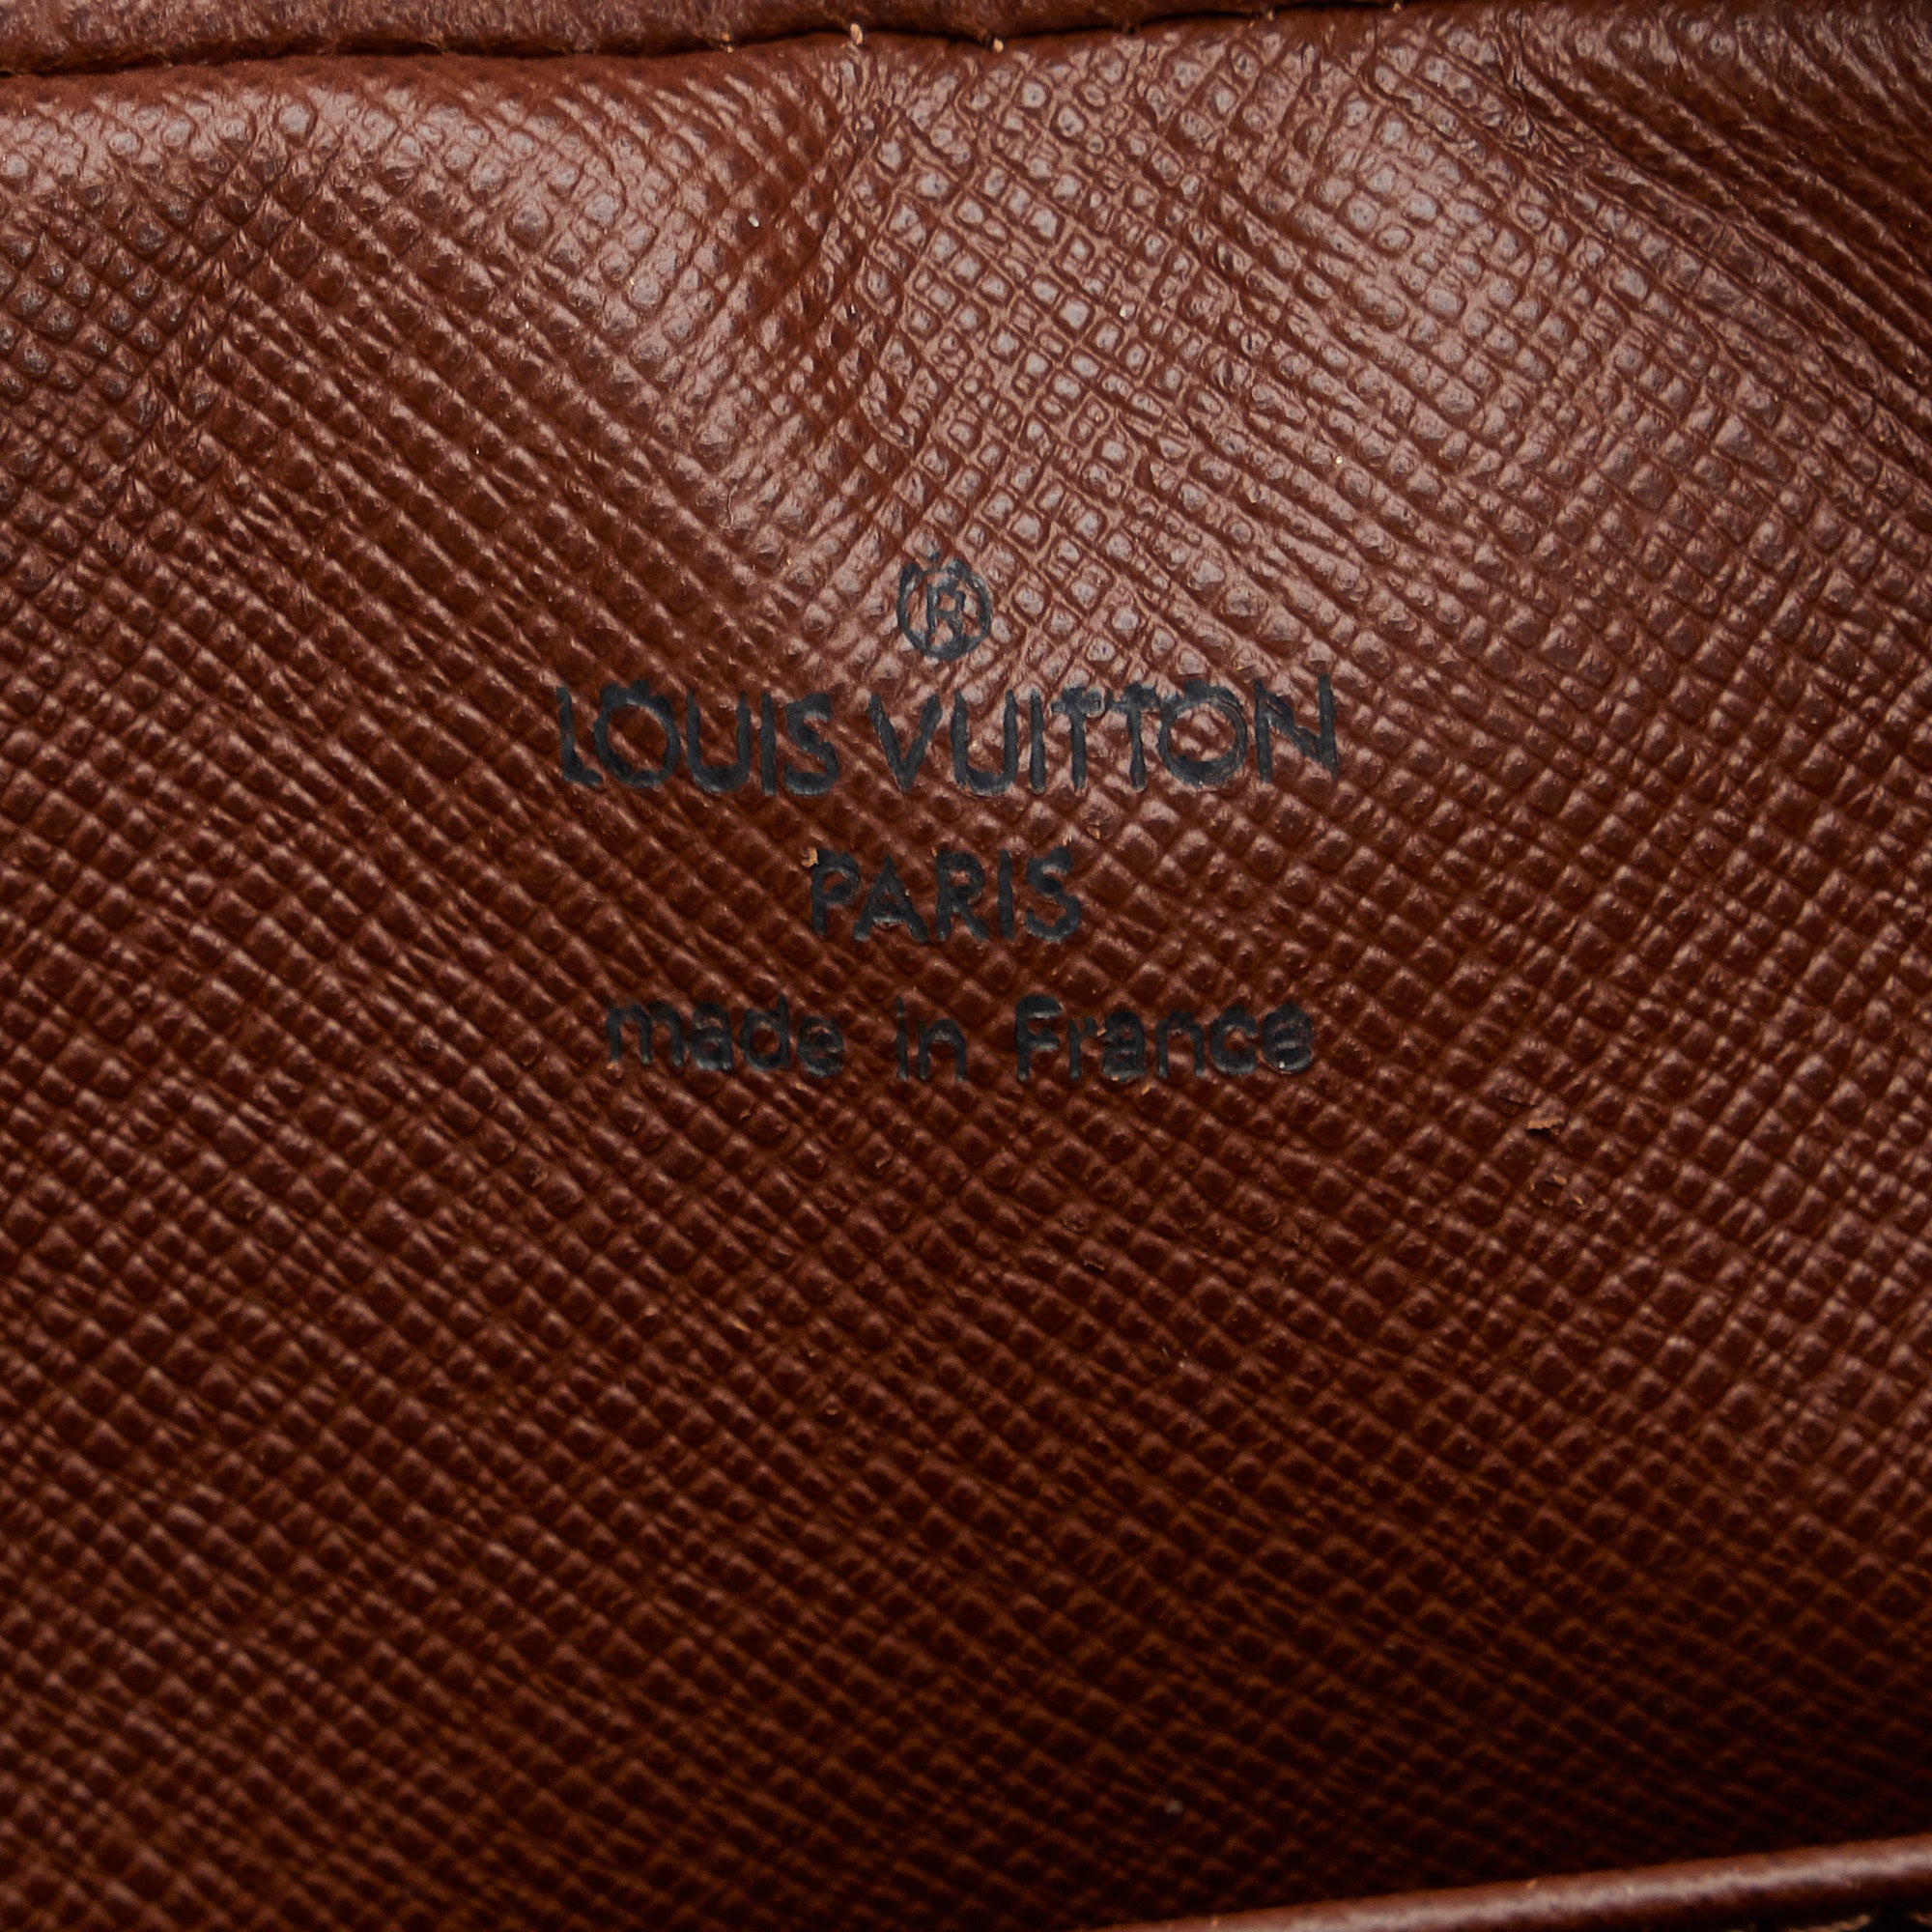 Date Code & Stamp] Louis Vuitton Cite MM